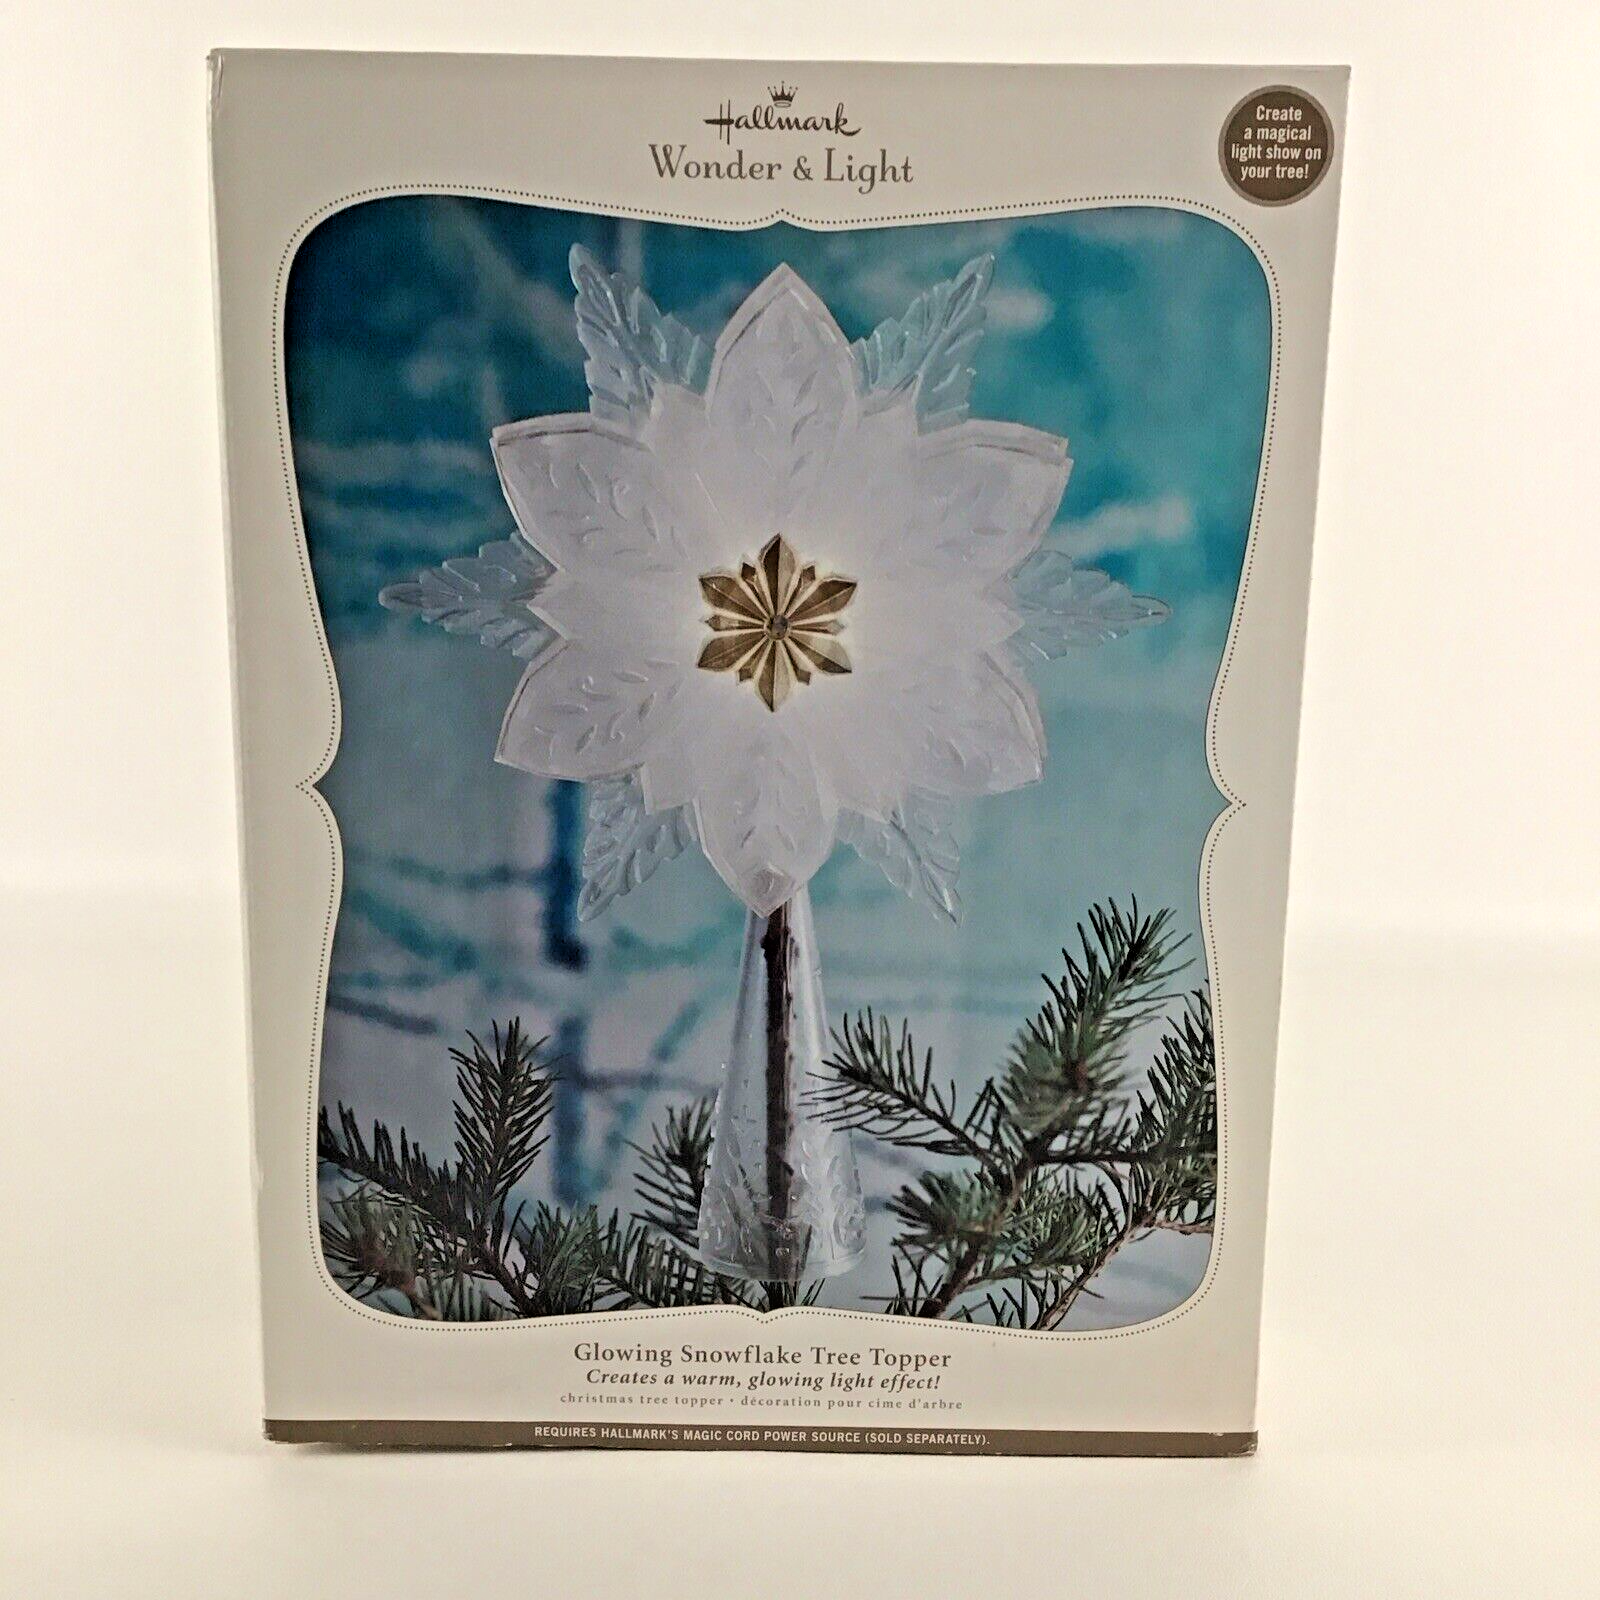 Hallmark Wonder & Light Glowing Snowflake Christmas Tree Topper Light Show 2010 - $39.55